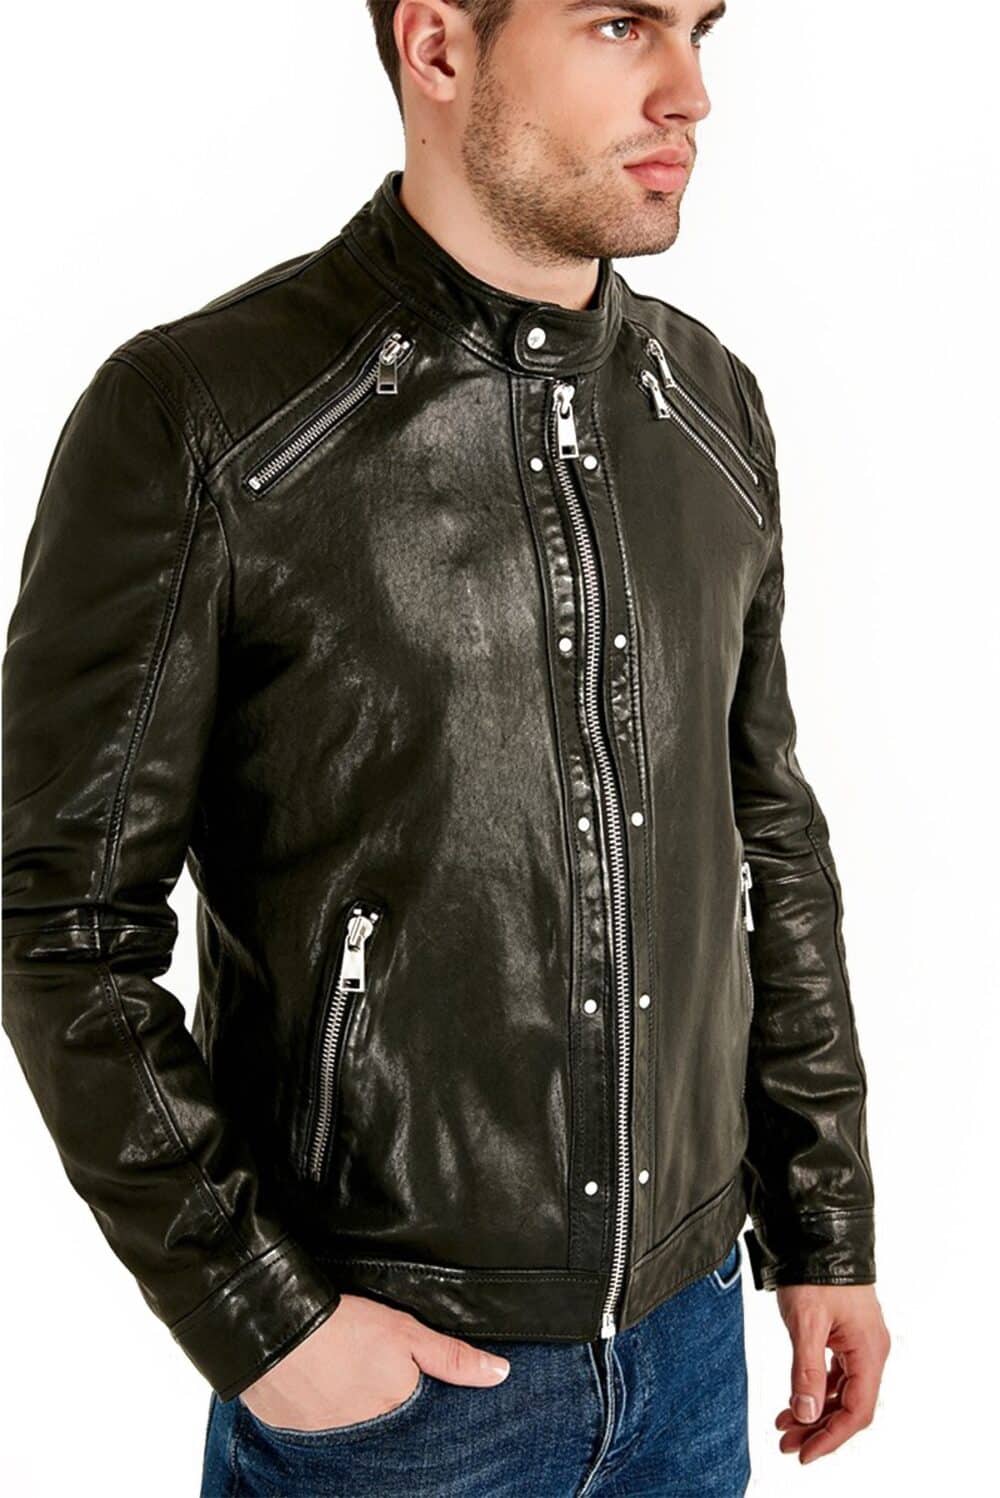 Grant Galore Olive Leather Jacket - 100% Lambskin Leather